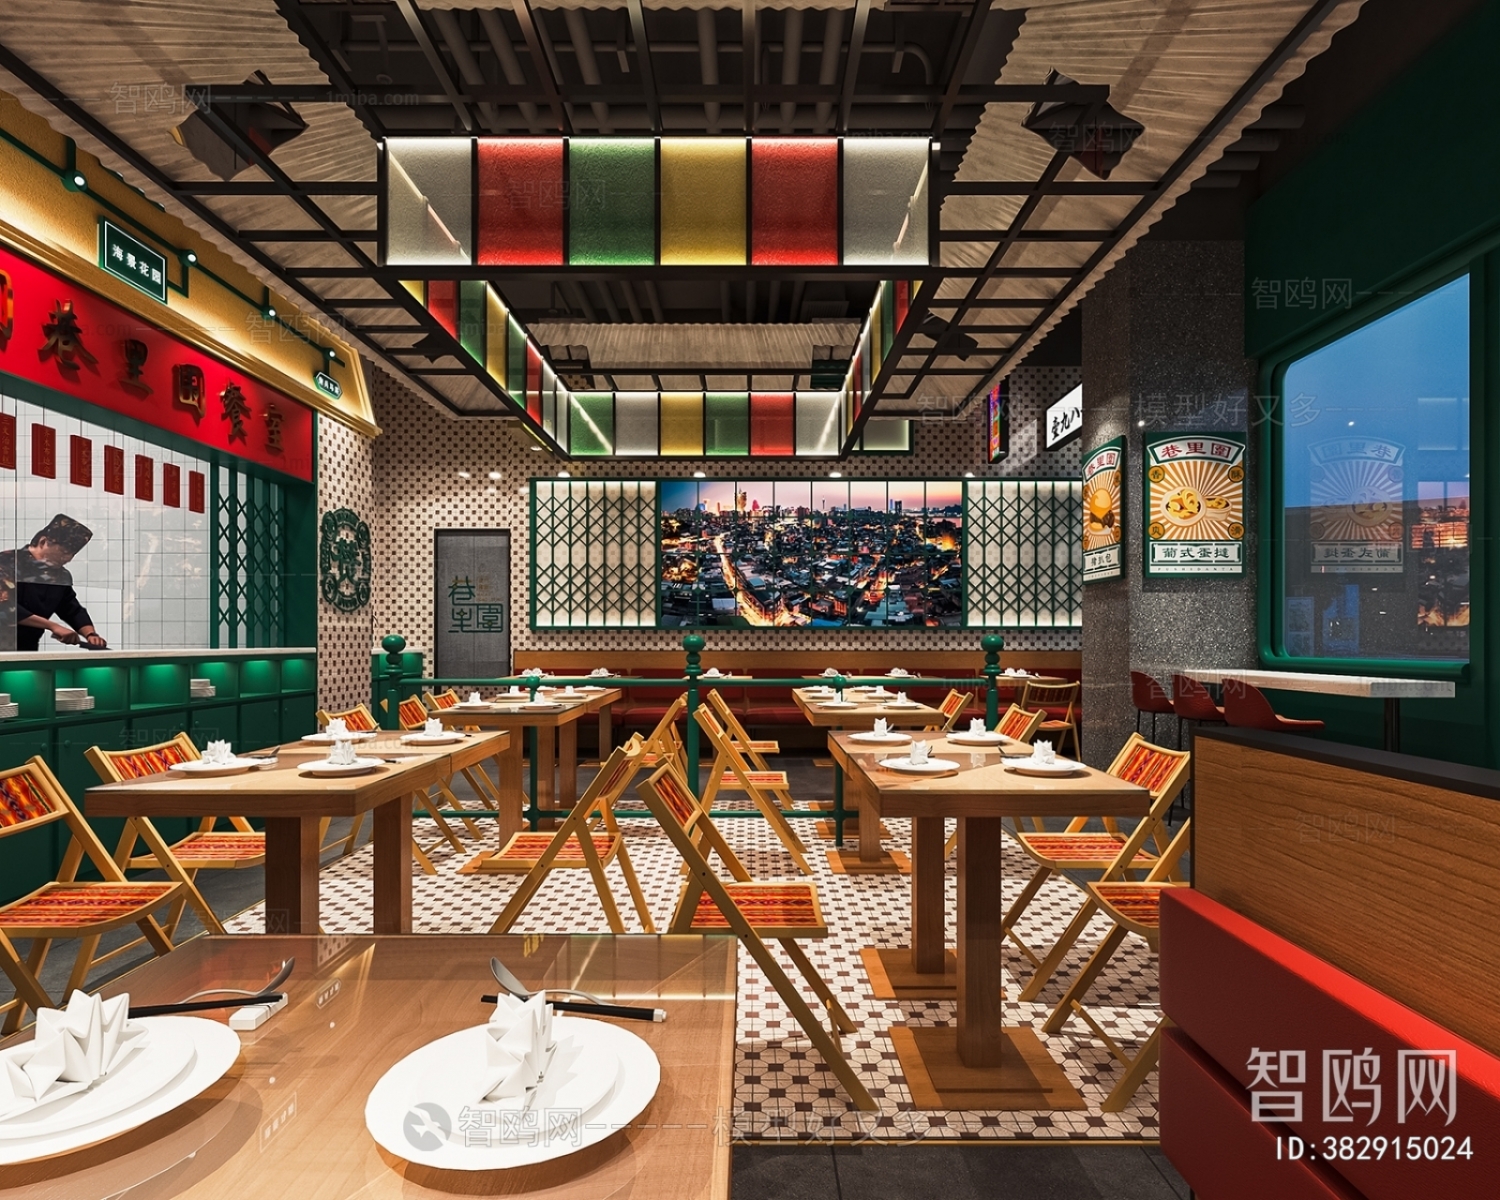 Hong Kong Style Restaurant